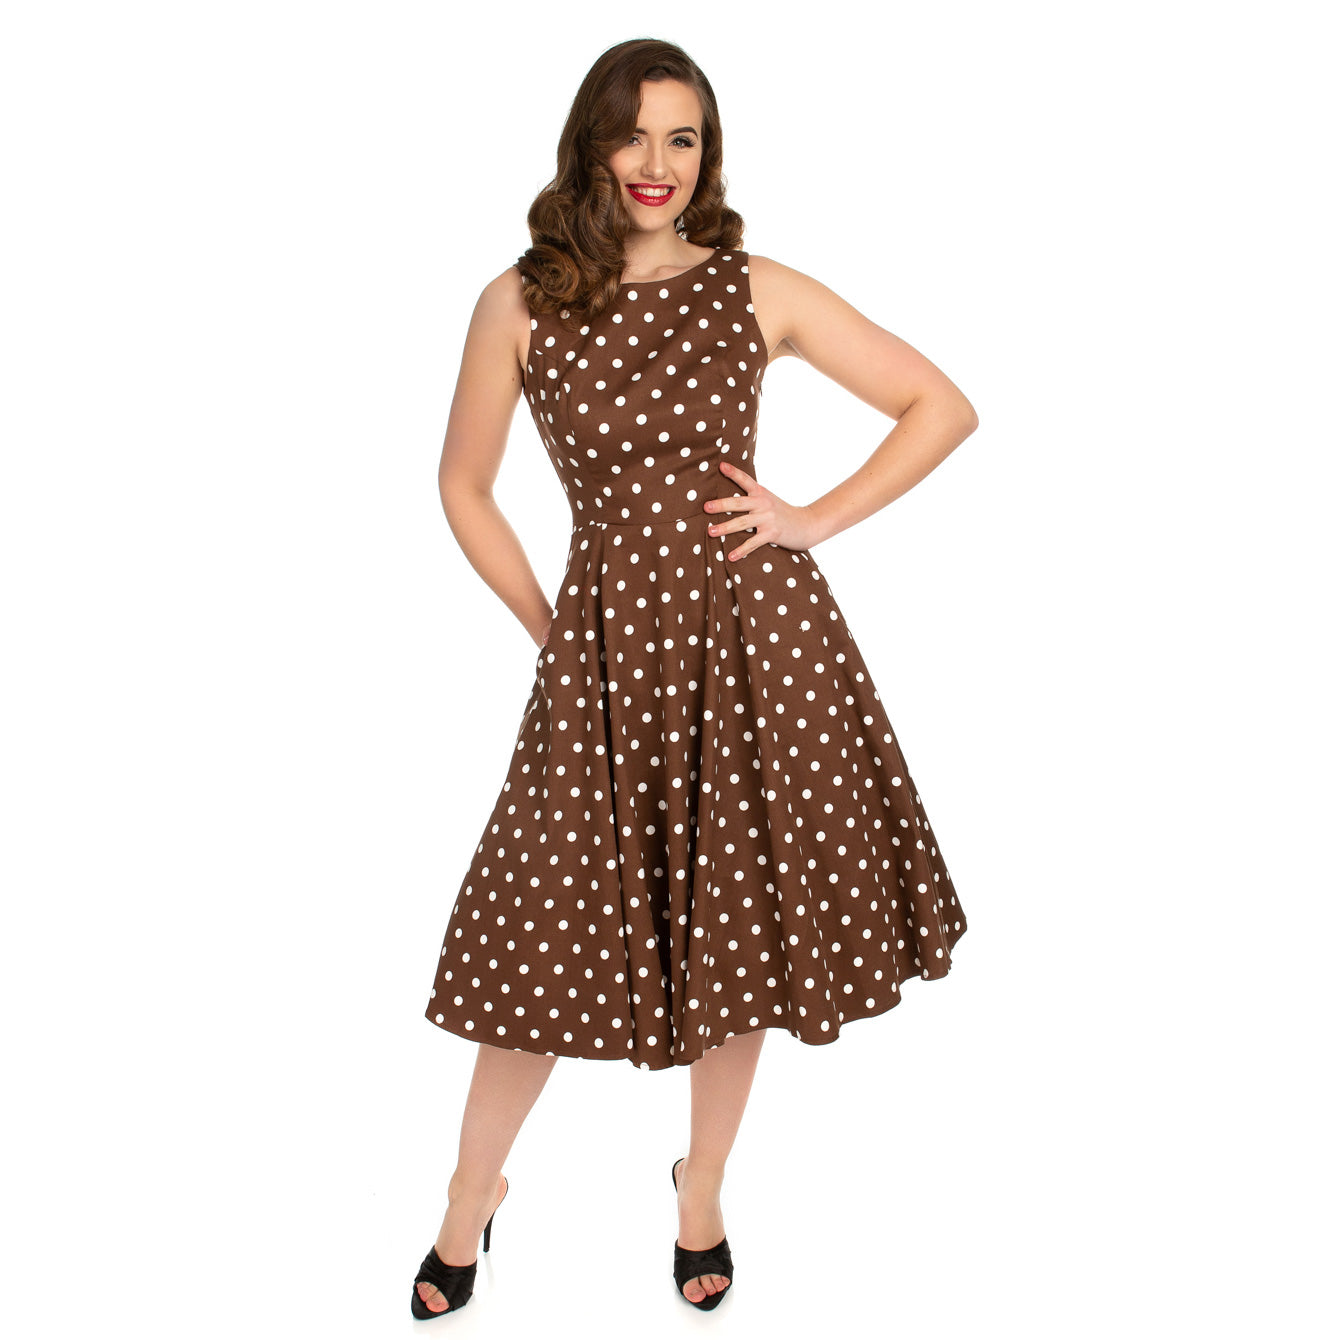 Chocolate Brown And White Polka Dot 50s Audrey Swing Dress - Pretty Kitty Fashion